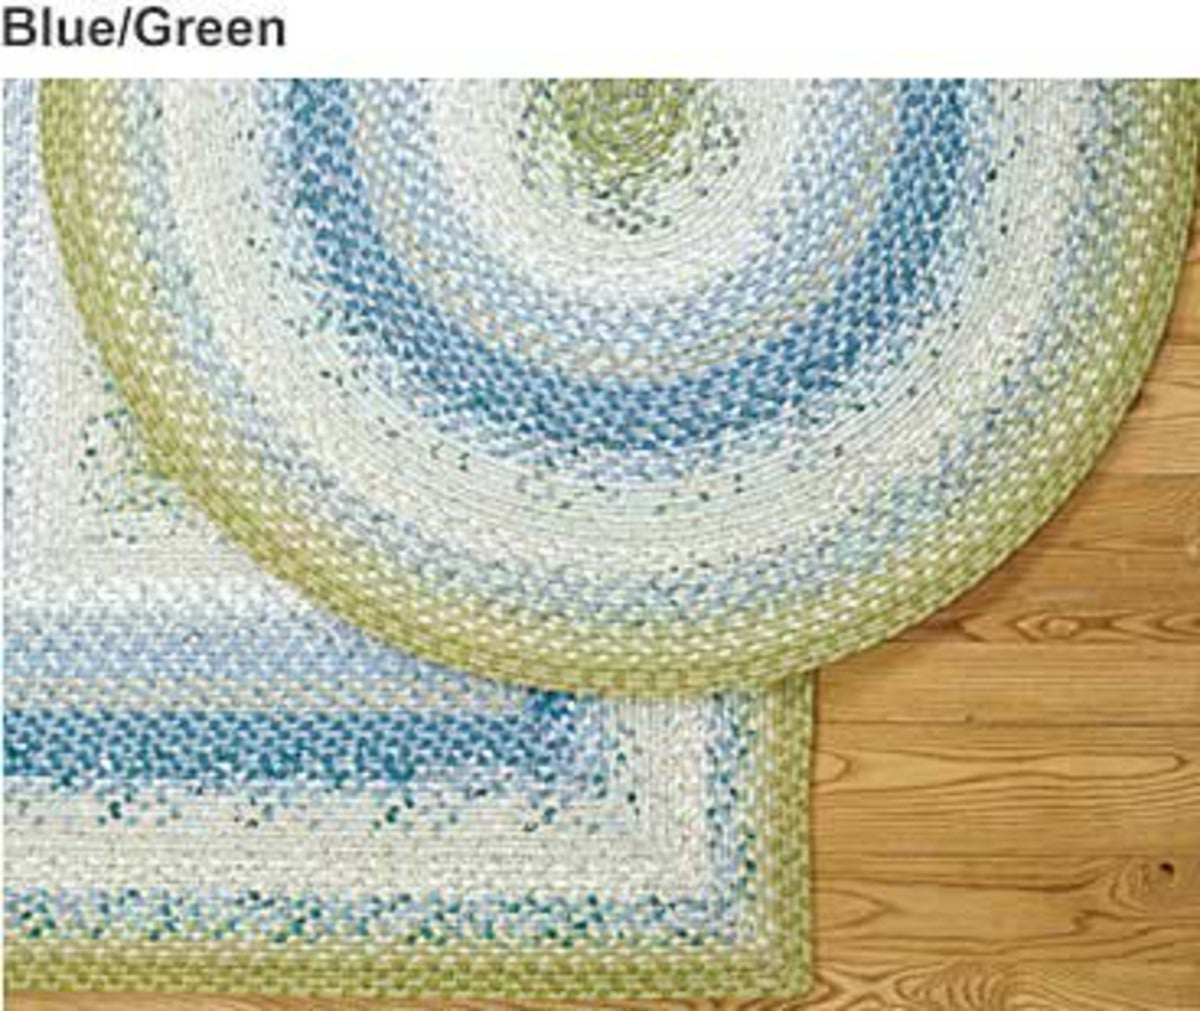 4' x 6' Rectangular Cotton Blend Braided Rug - Blue/Green